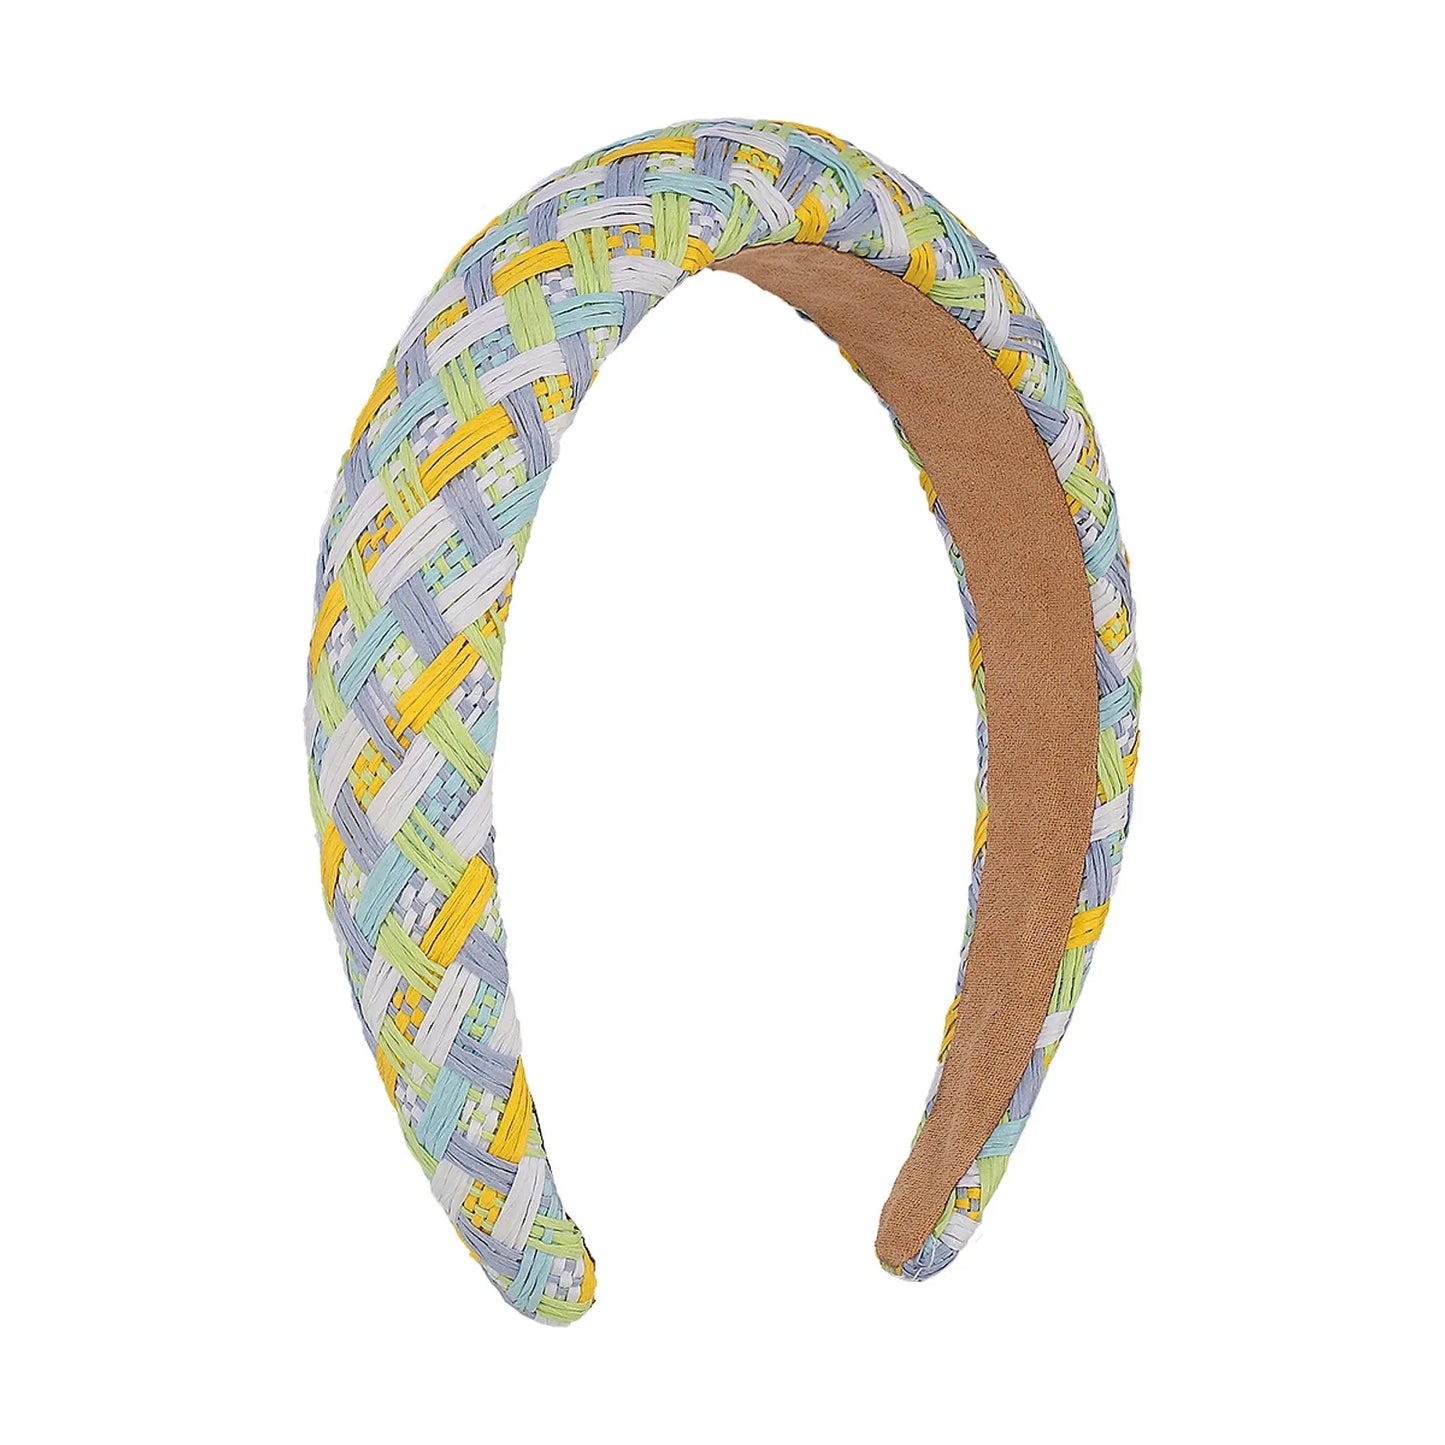 Brescia headband